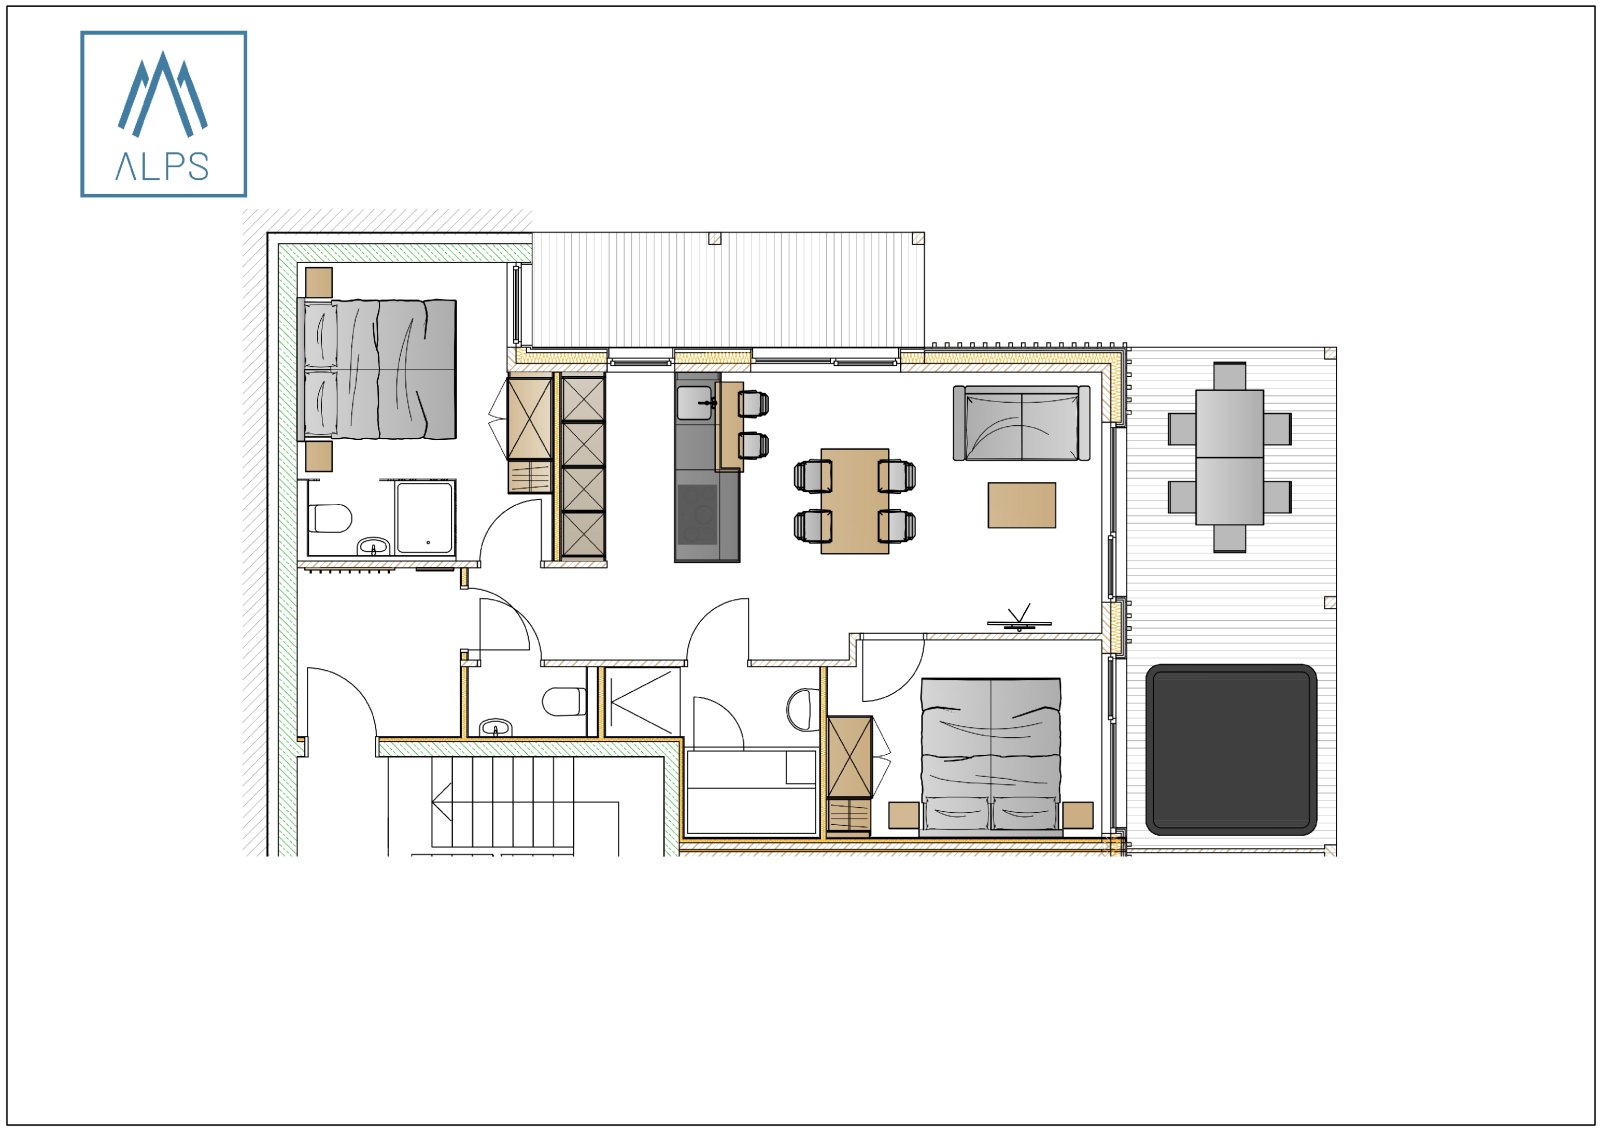 Planai apartman - 60 m2 / 4 fős